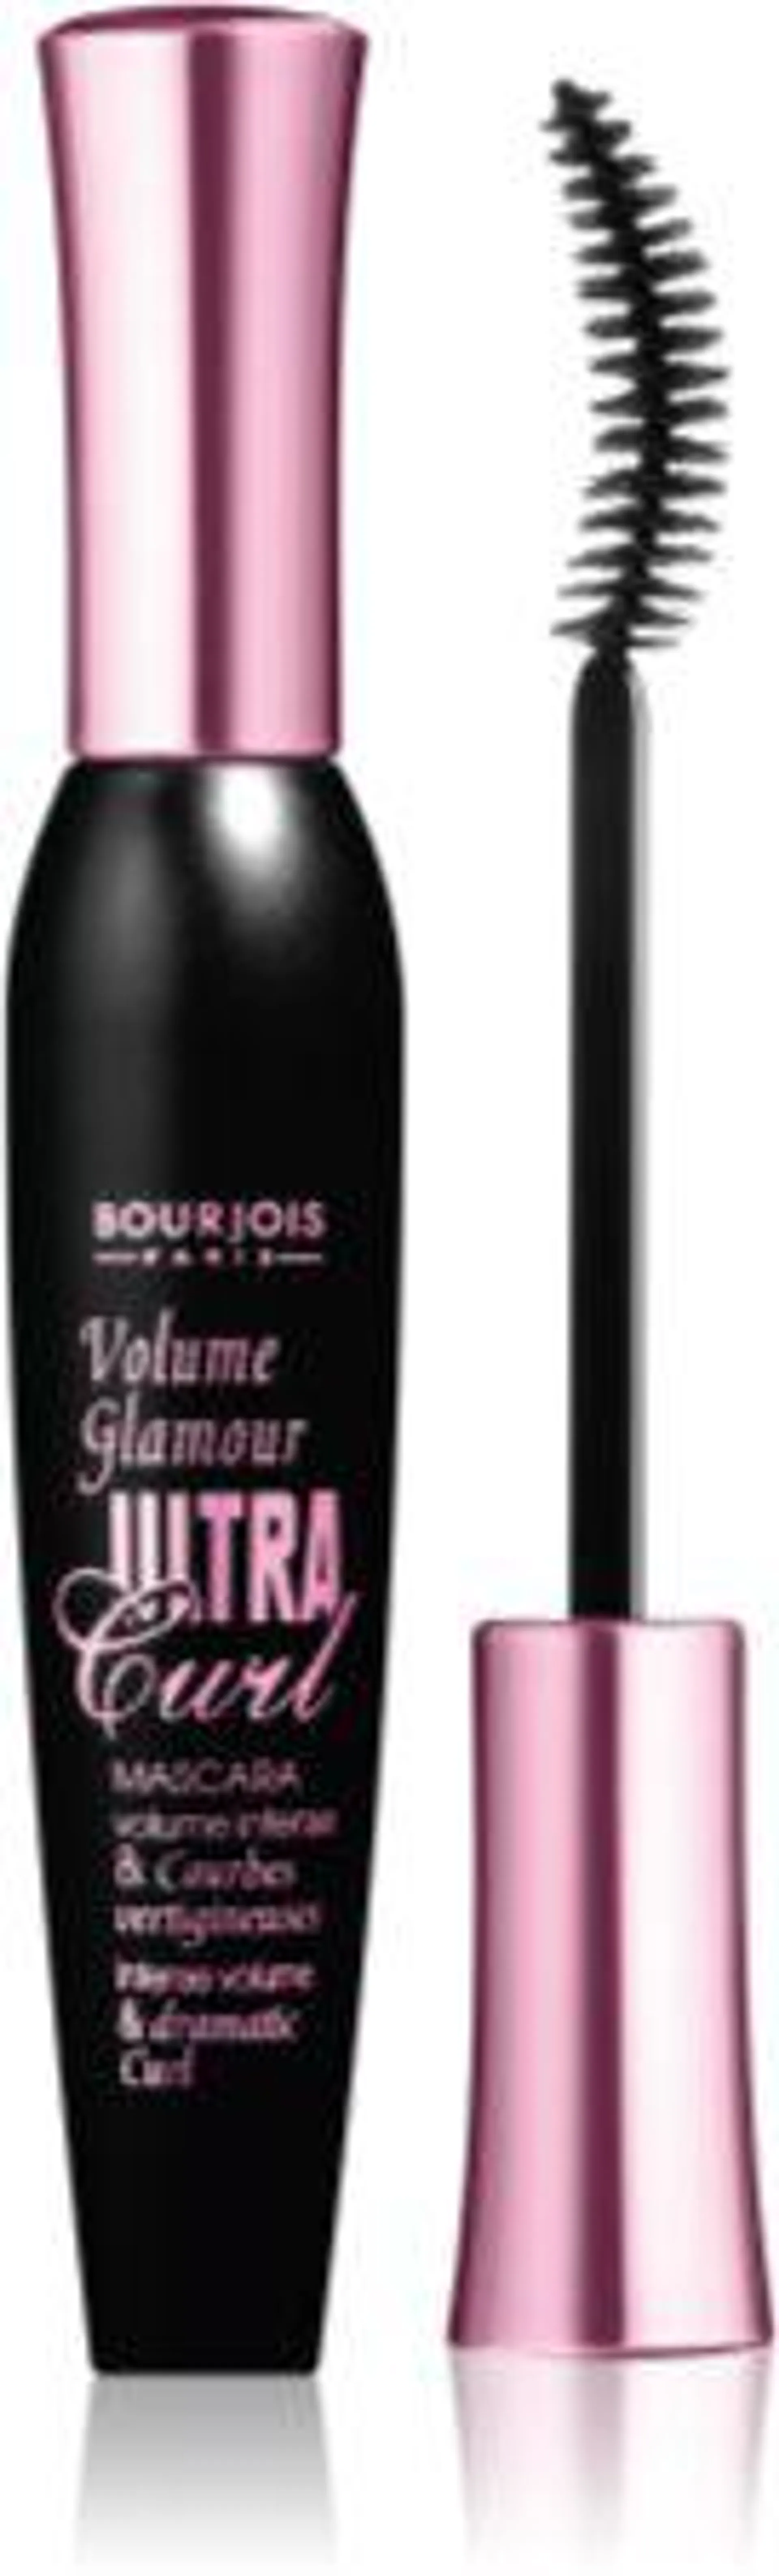 Mascara Volume Glamour Ultra-Curl